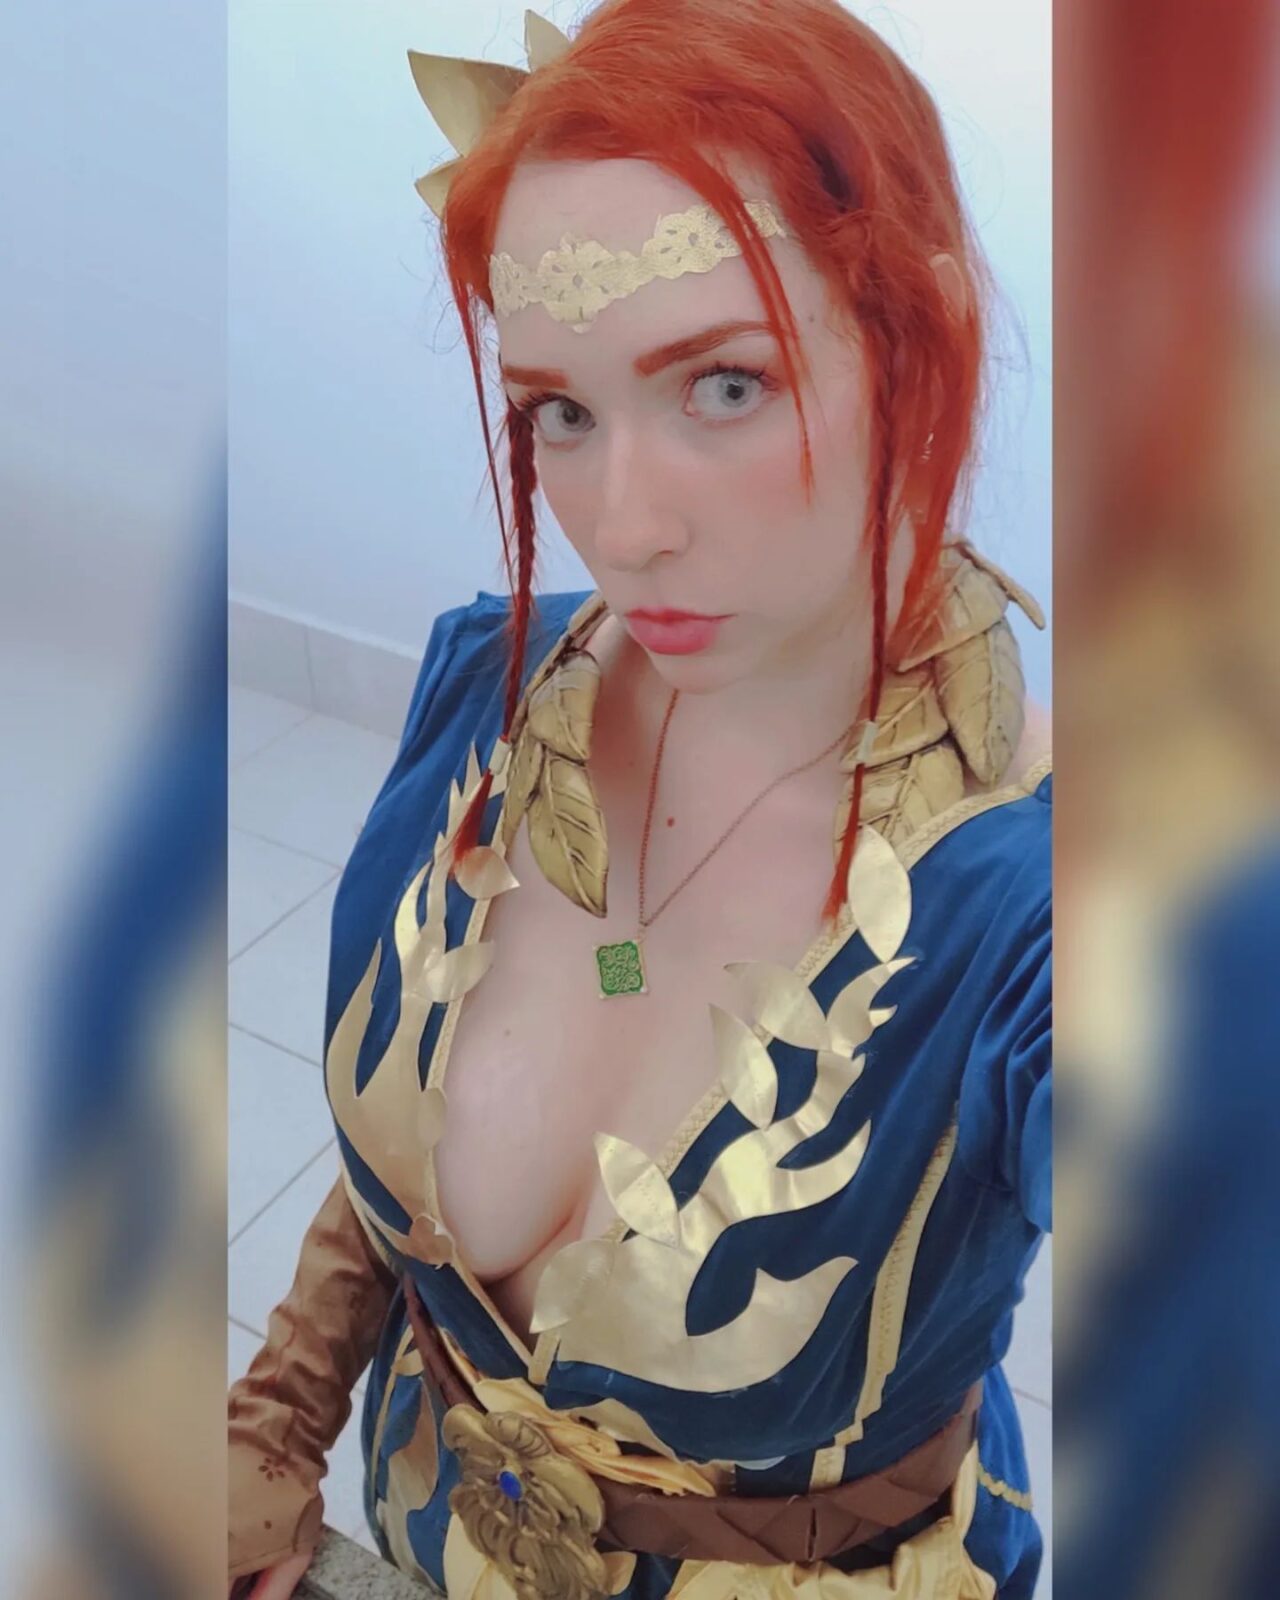 Brasileira iceviihqueen fez um encantador cosplay da Triss Merigold de The Witcher